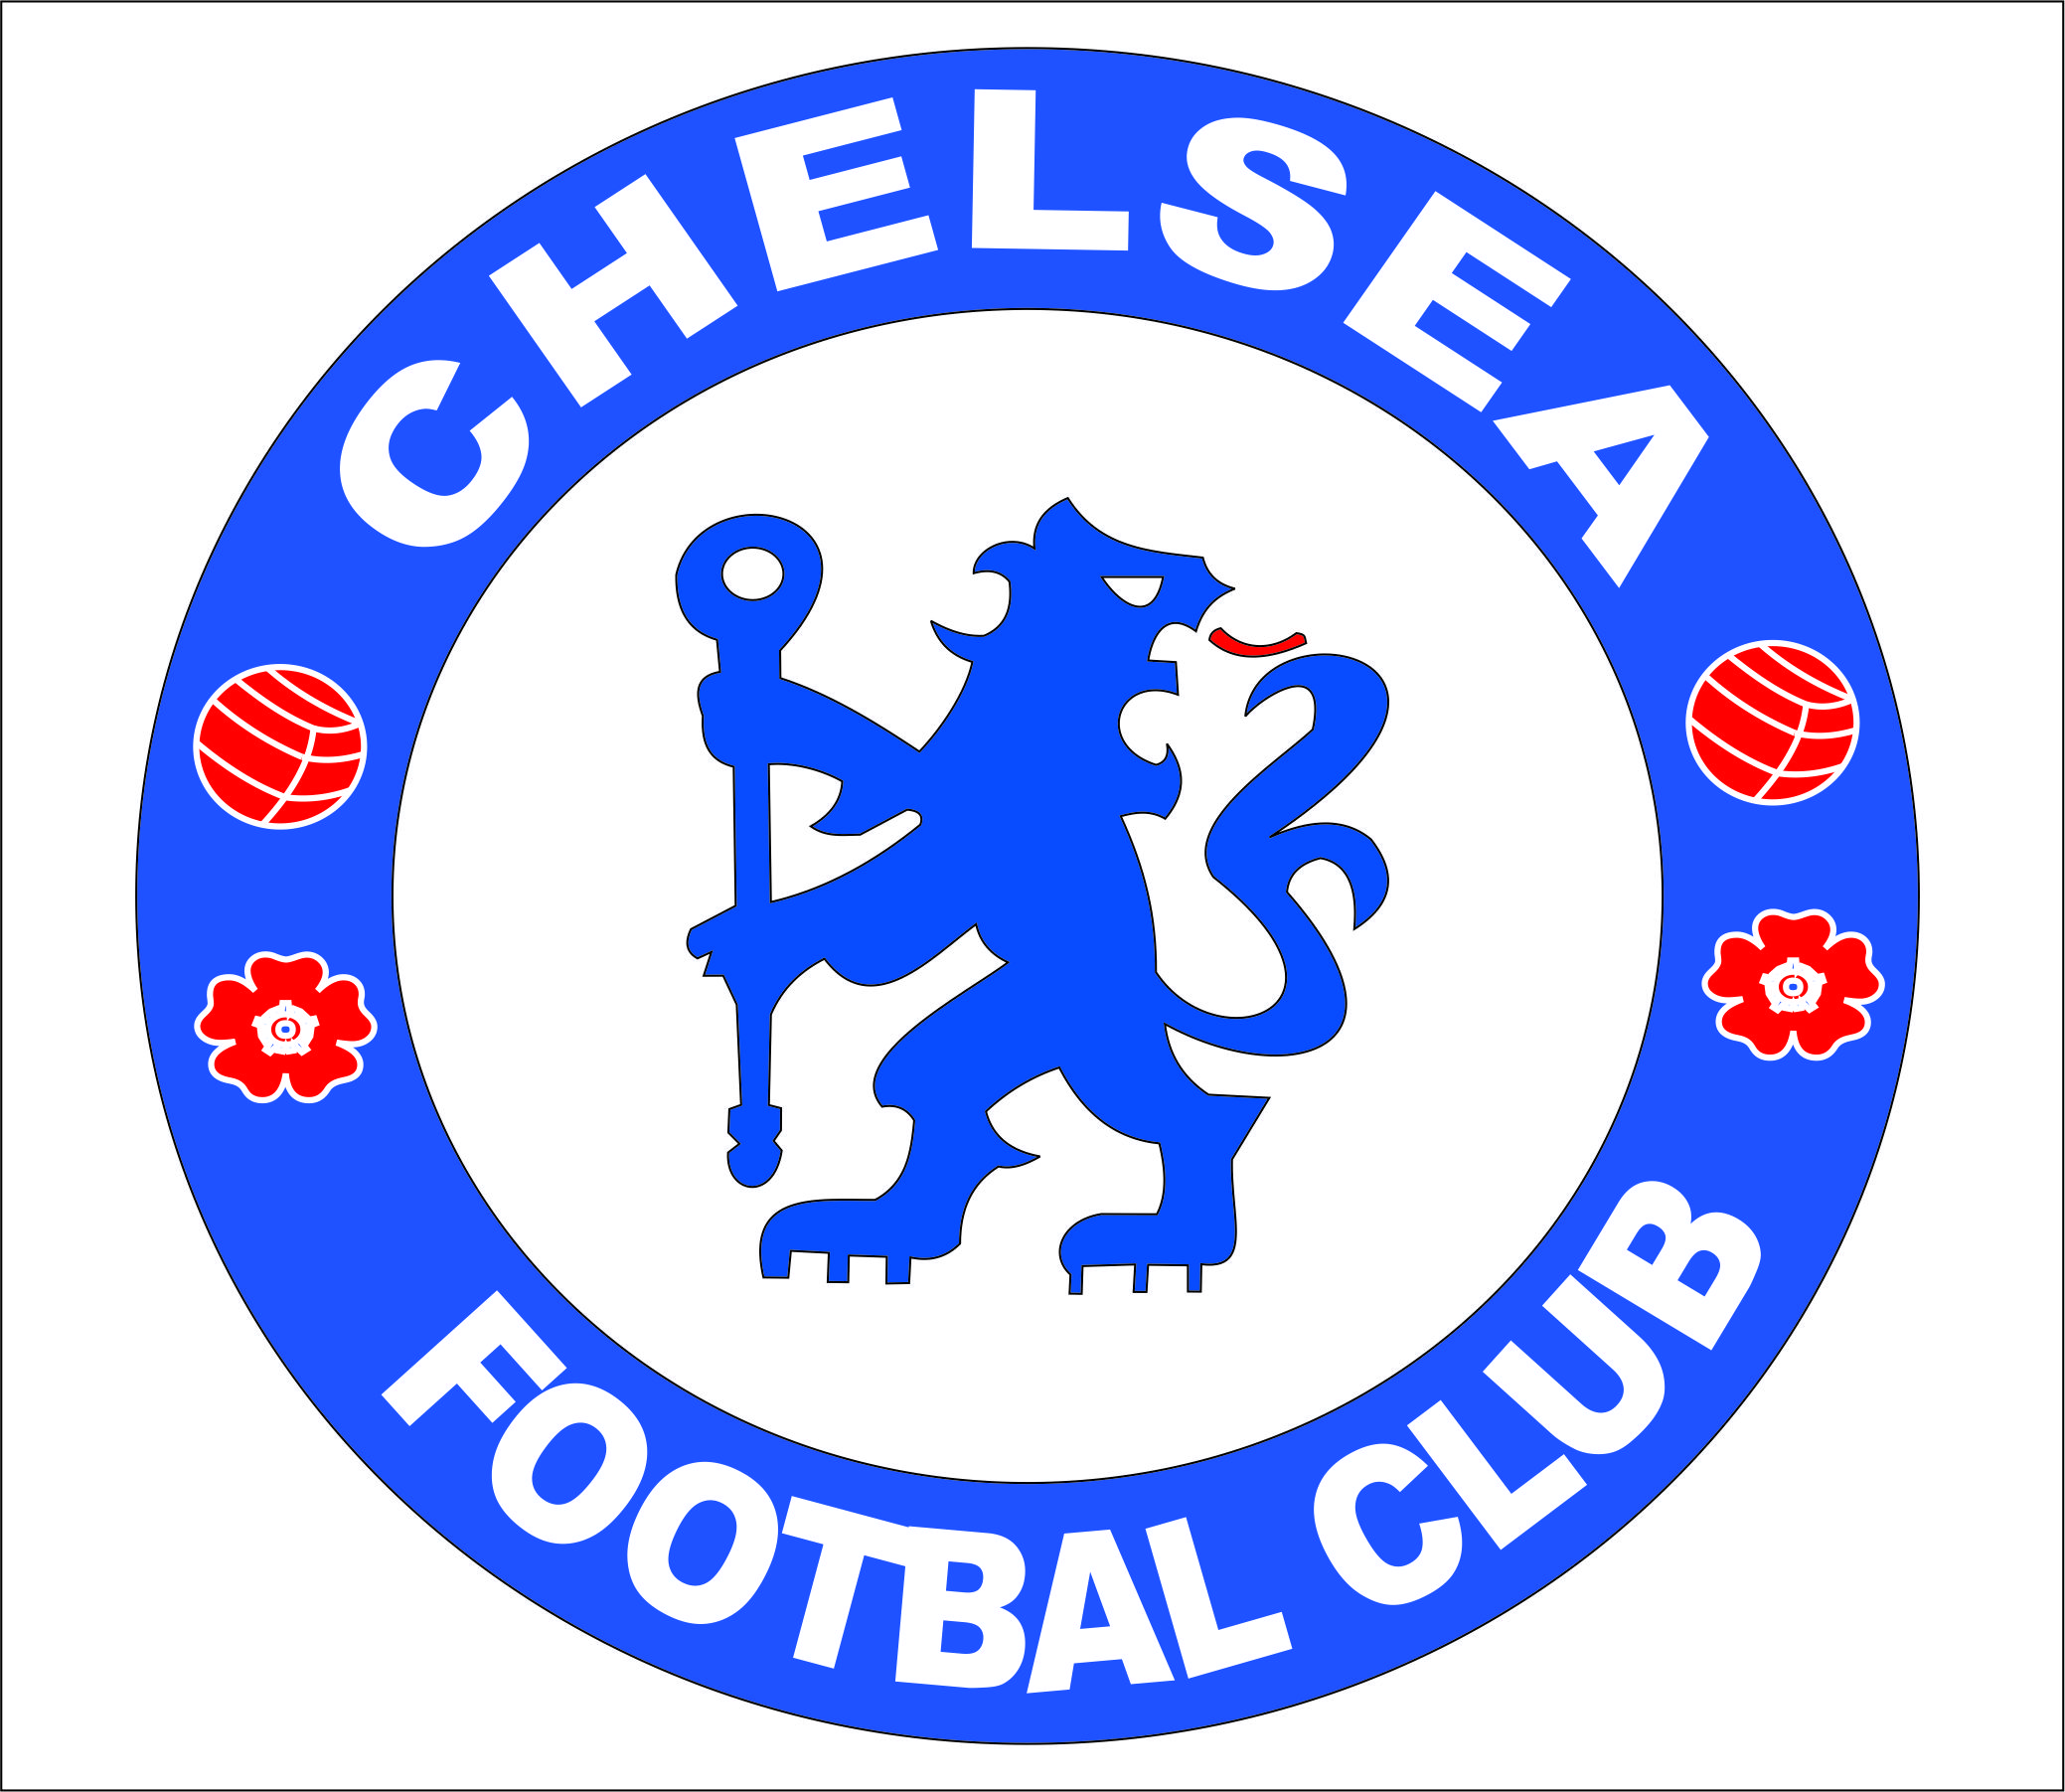 Chelsea vector Logos